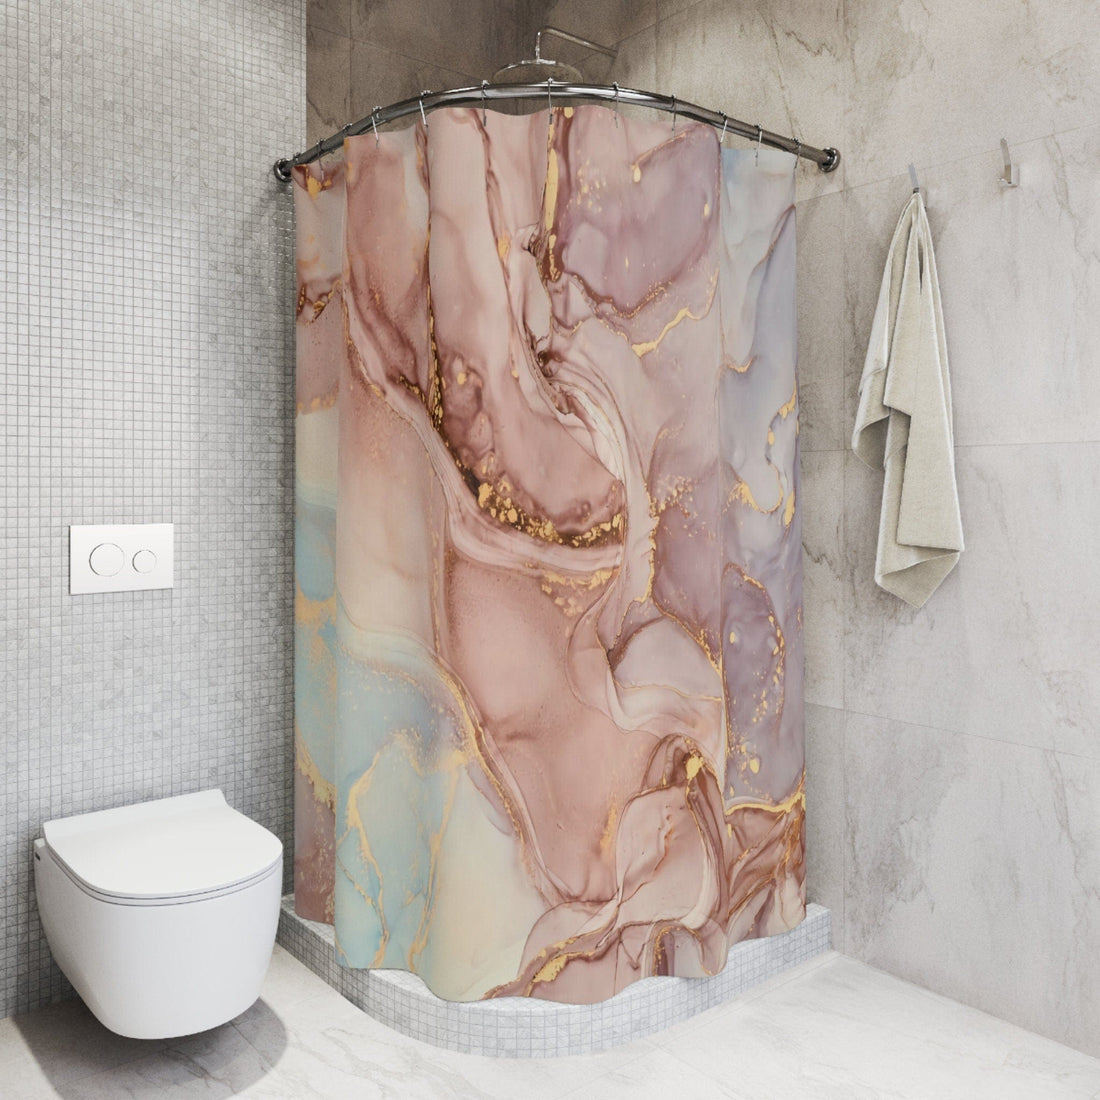 Kate McEnroe New York Shower Curtain in Pastel Peach, Blue, Gold Marble Print, Custom Designed, Waterproof, Machine Washable Standard Fit Bath CurtainsShower CurtainsS40 - MAR - PEA - 7X9P